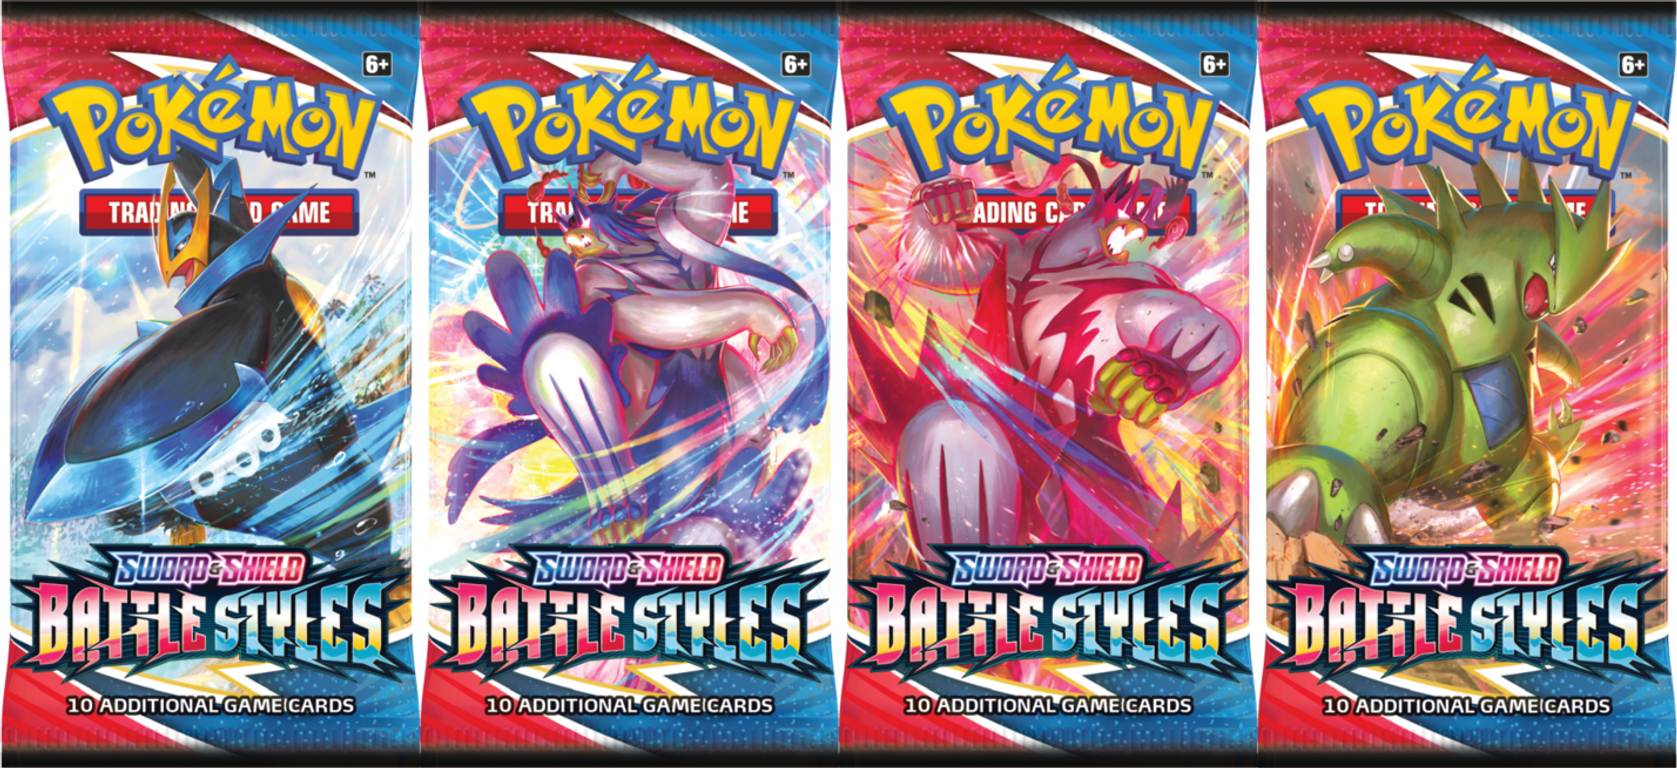 Pokémon TCG: Sword & Shield - Battle Styles Booster Pack box